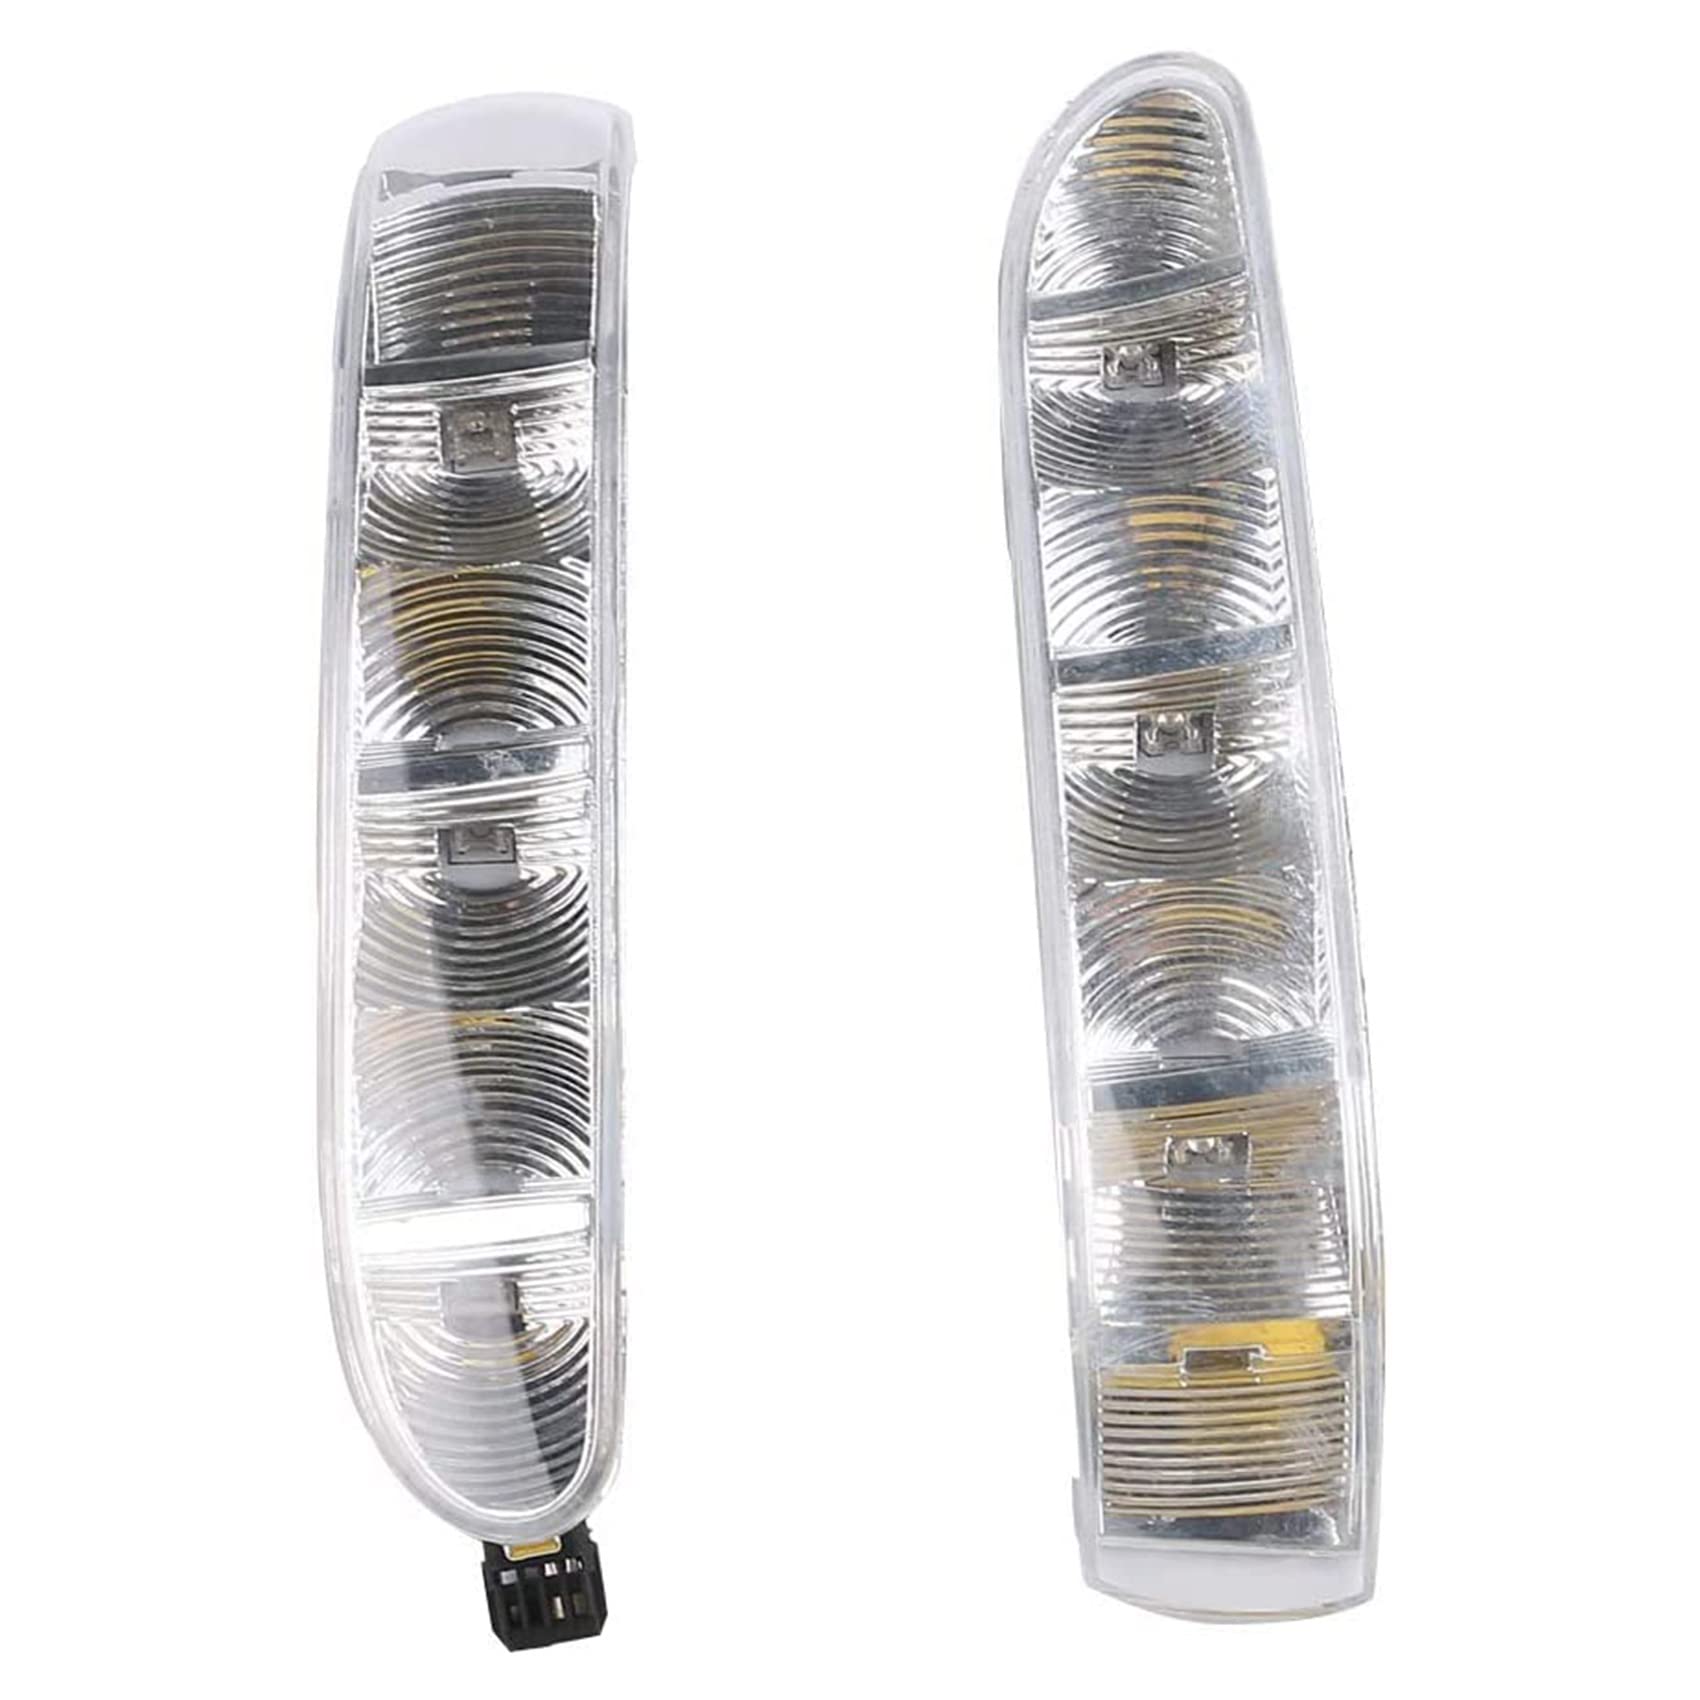 DKSooozs LED Rückspiegel Blinker Lampe für W220 W215 S Klasse CL500 2003-2006 2208200521 2208200621 von DKSooozs